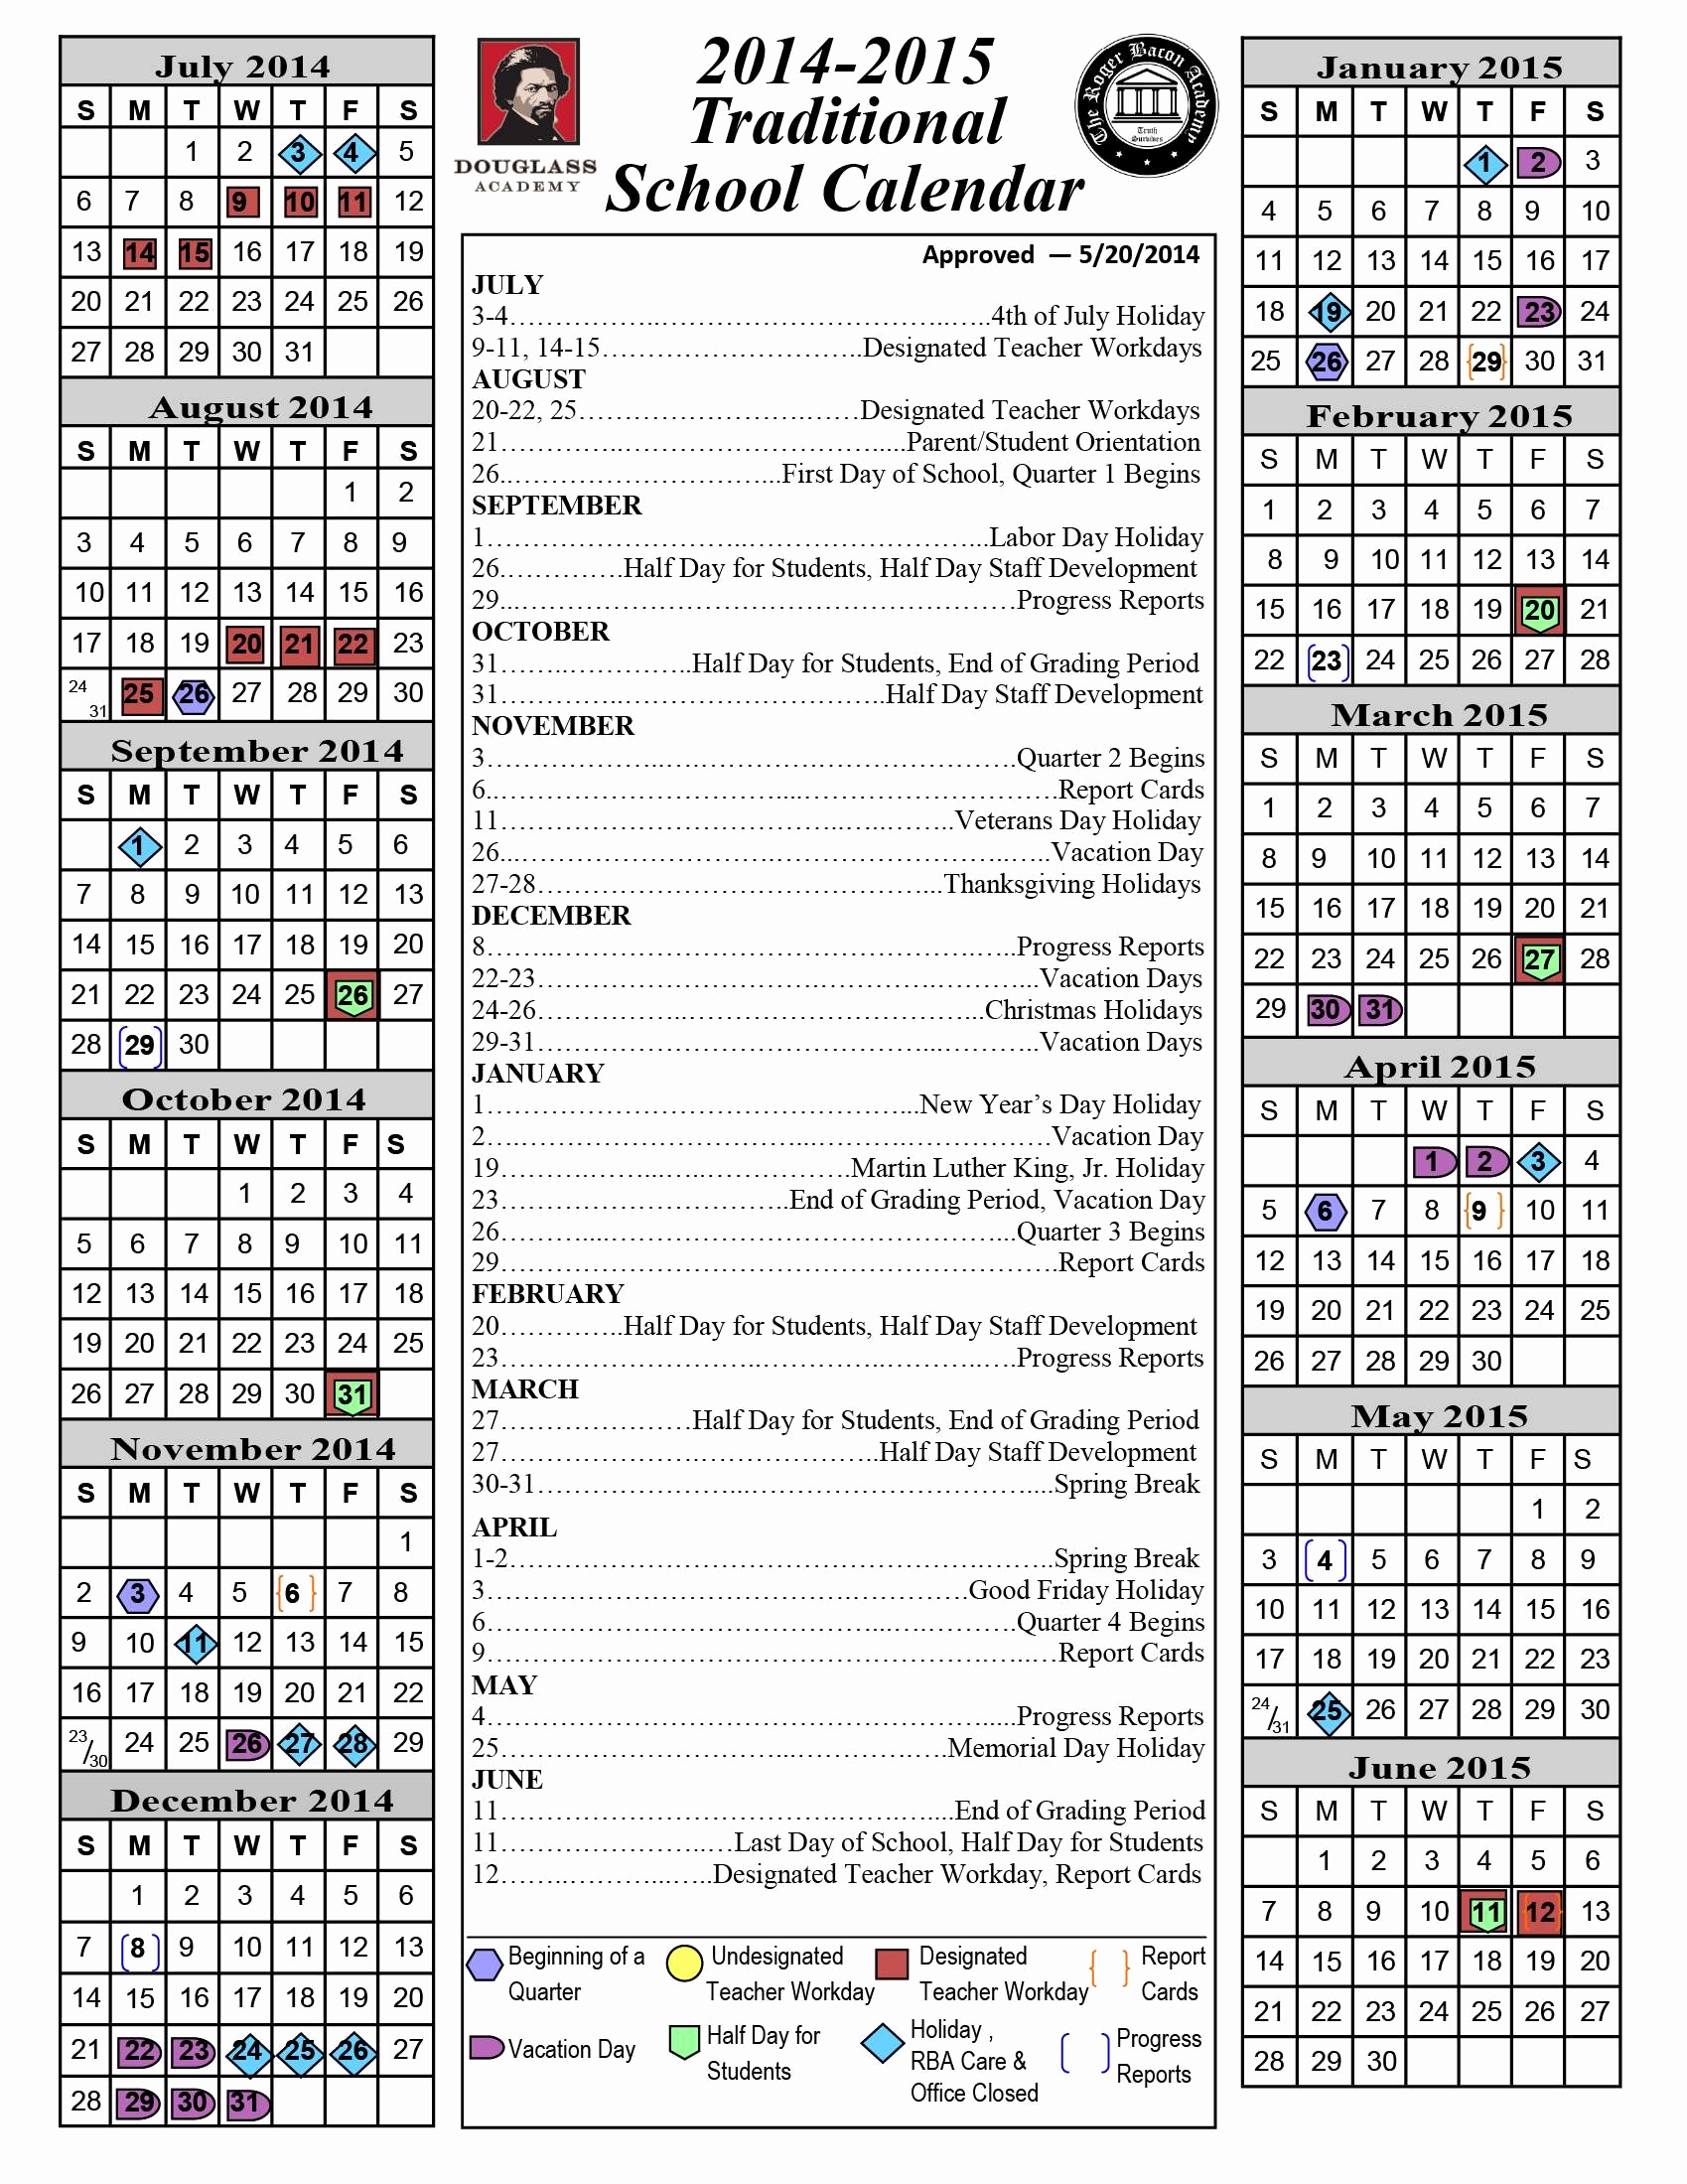 sccc-calendar-customize-and-print